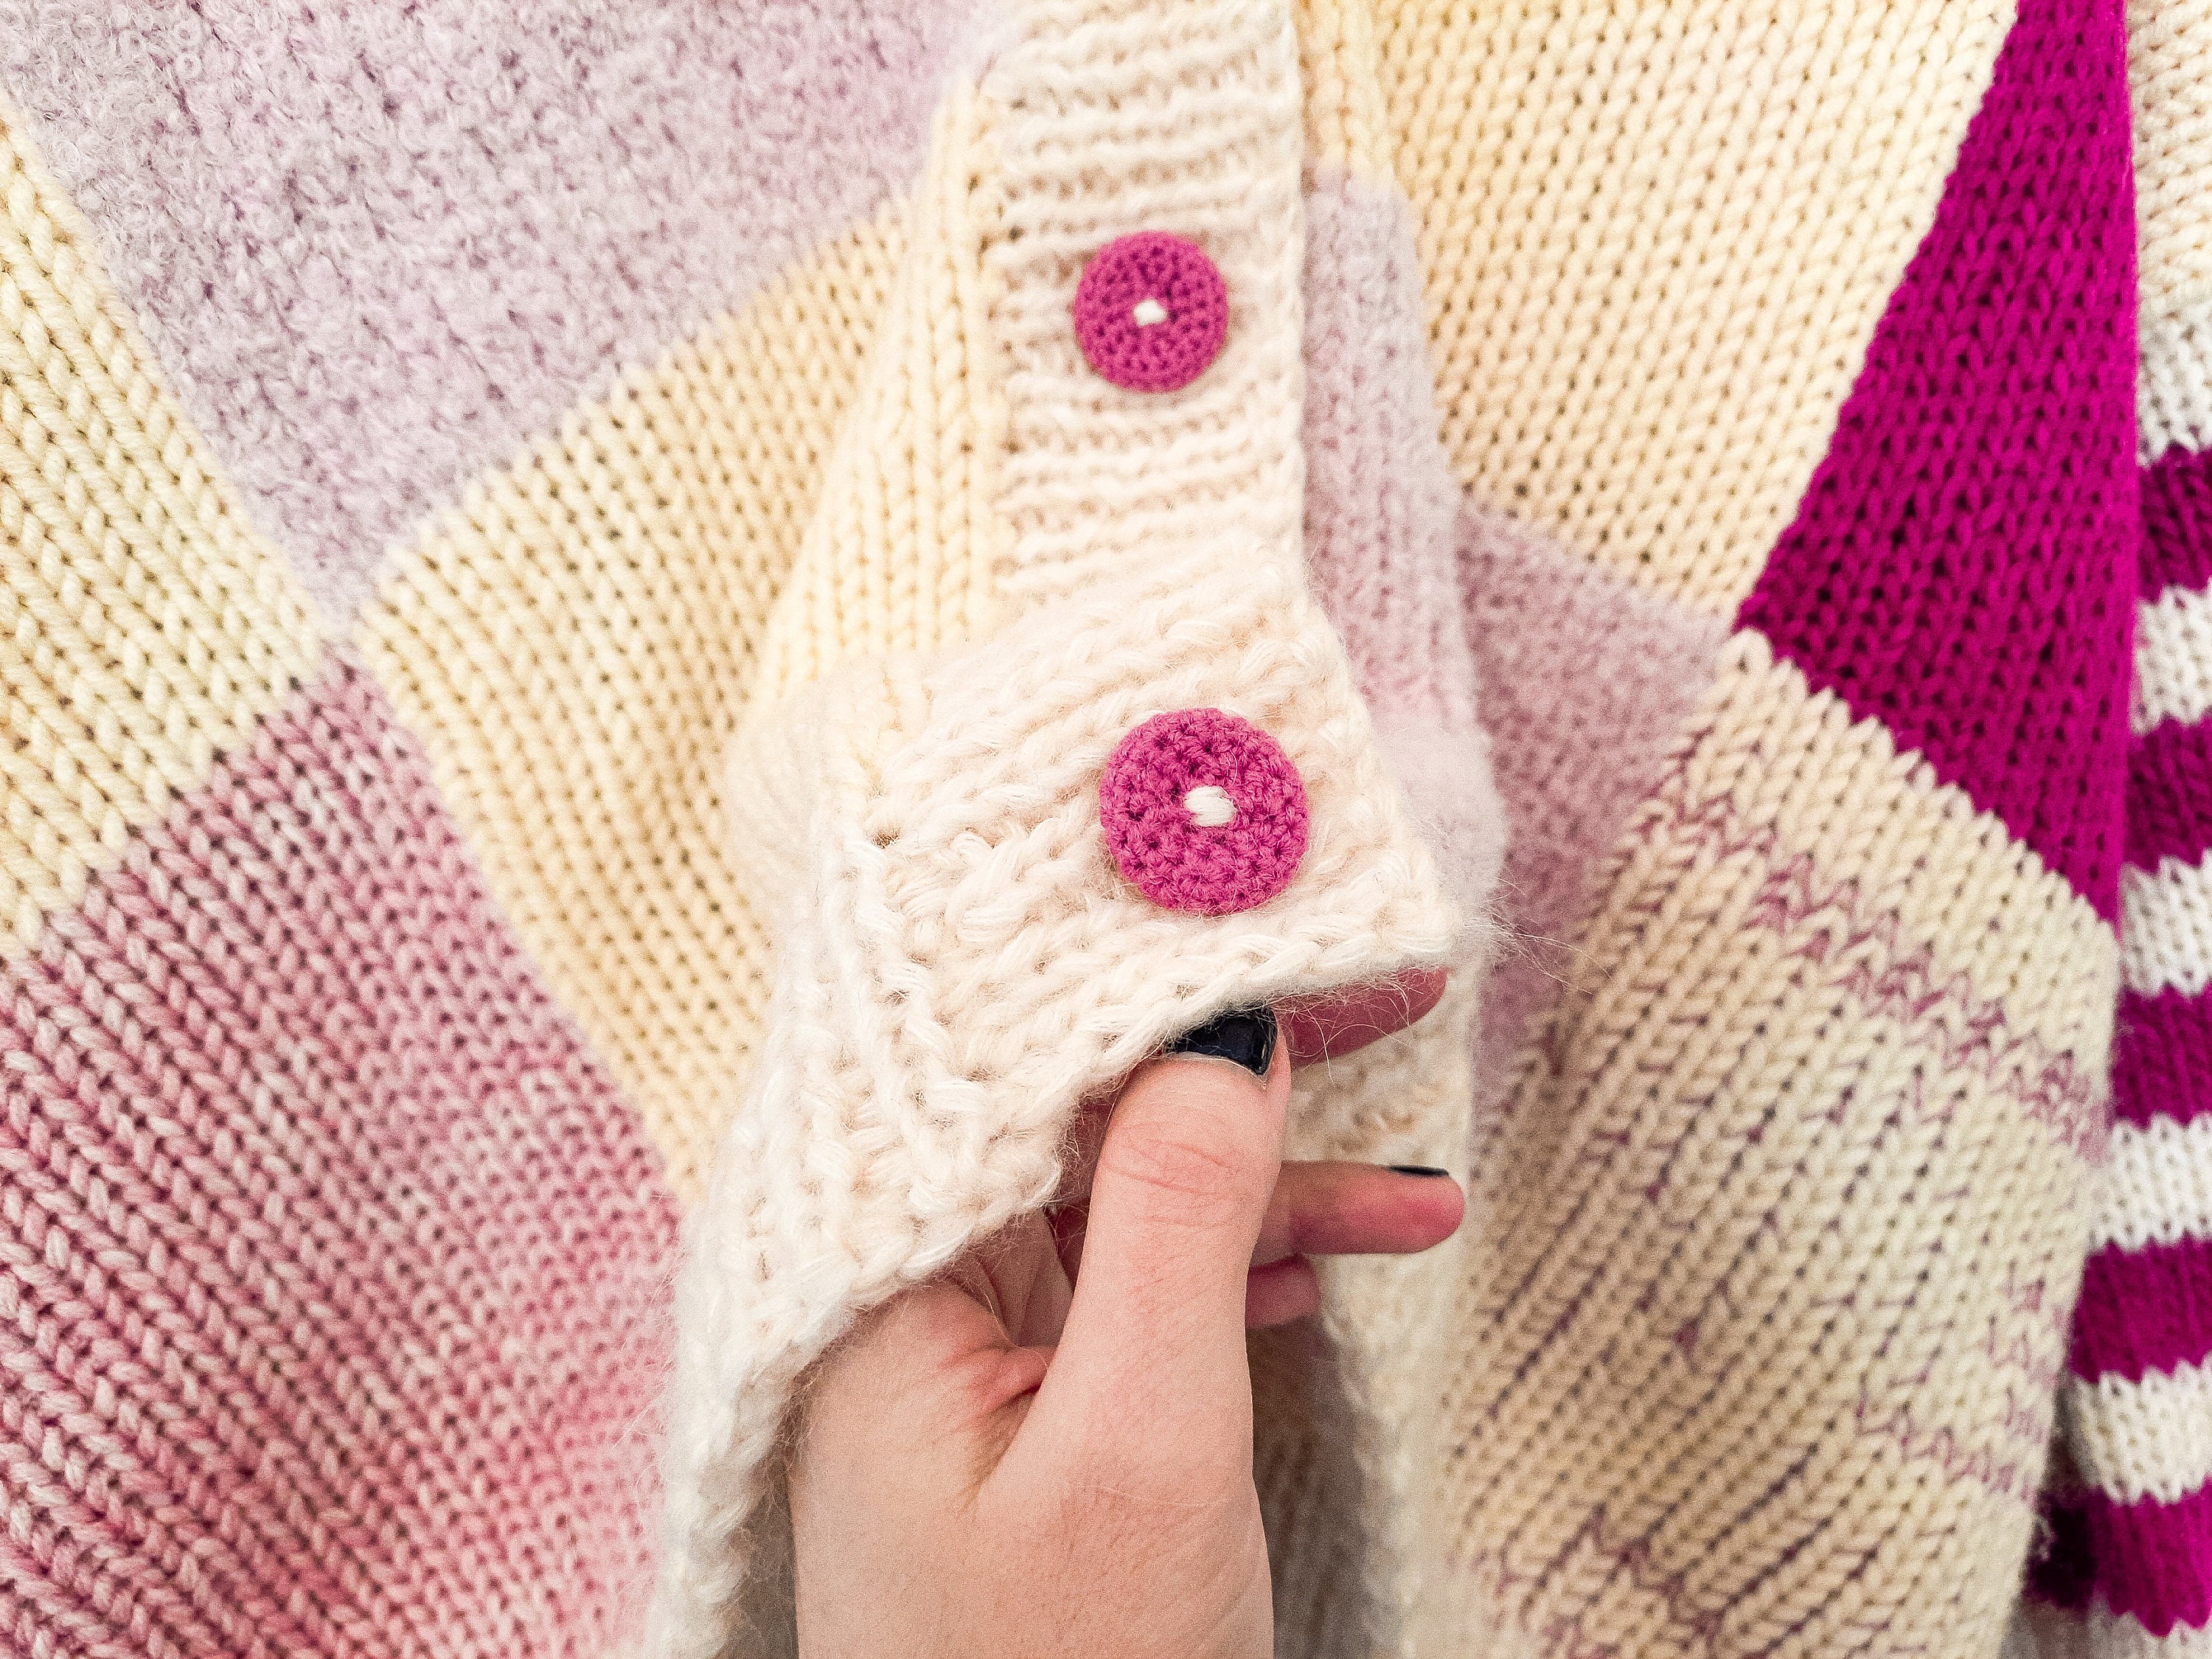 Sentro knitting machine long cardigan pattern - Knitting Machine patterns